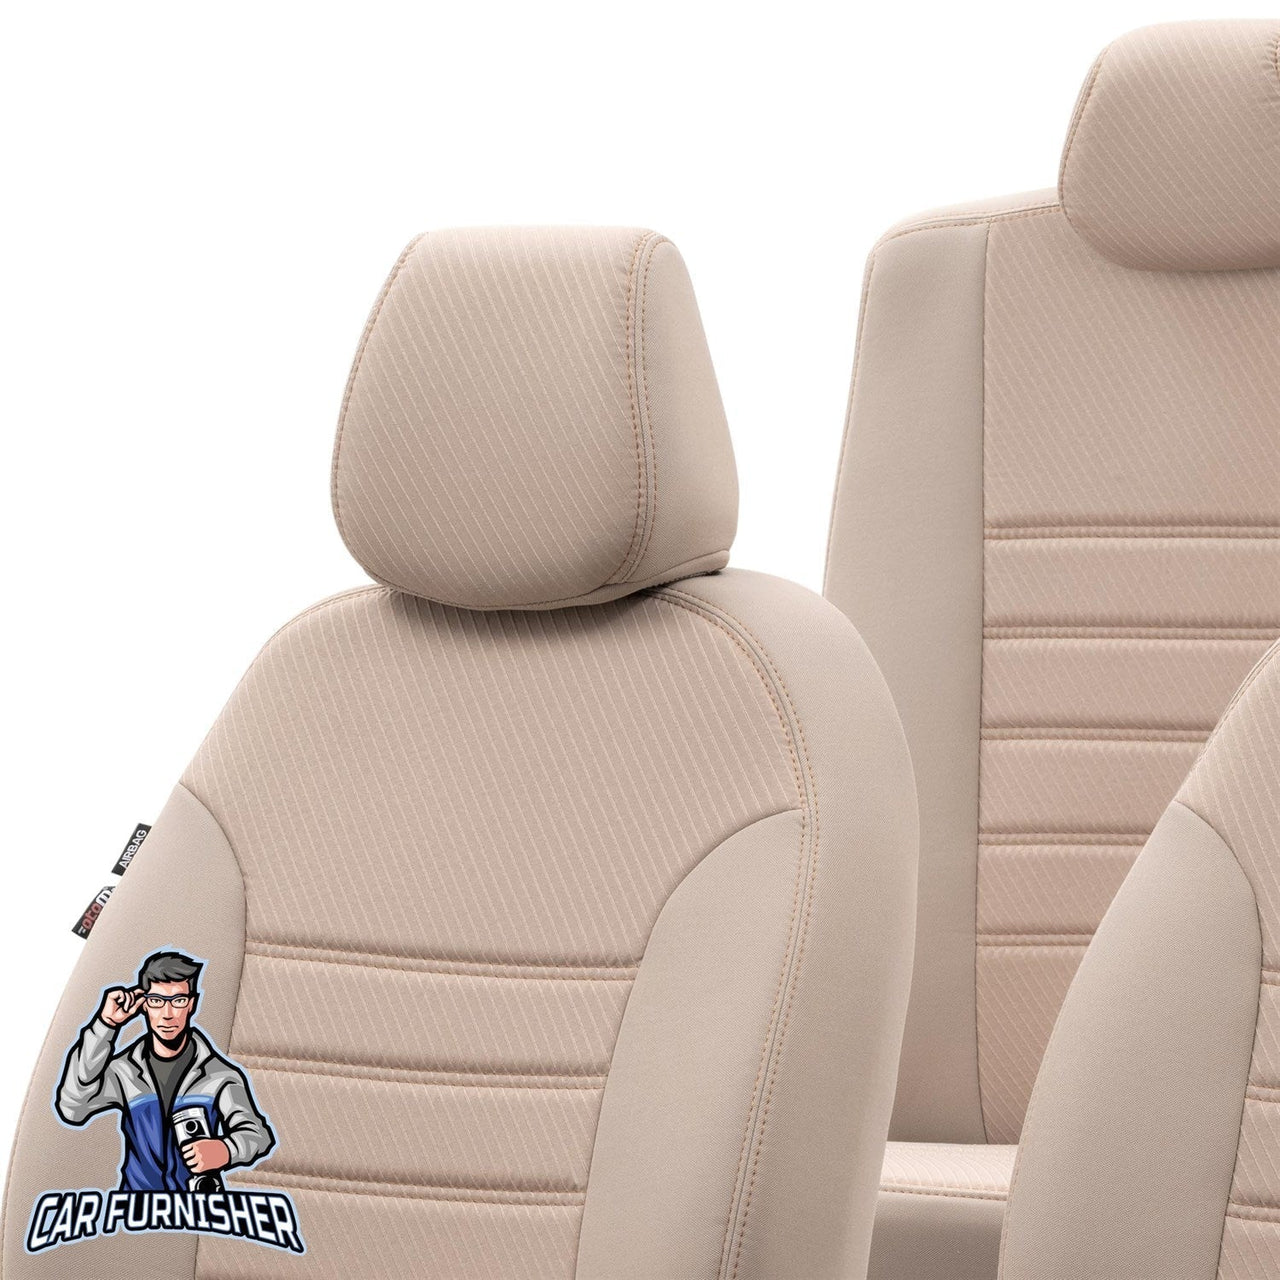 Dacia Spring Seat Covers Original Jacquard Design Dark Beige Jacquard Fabric